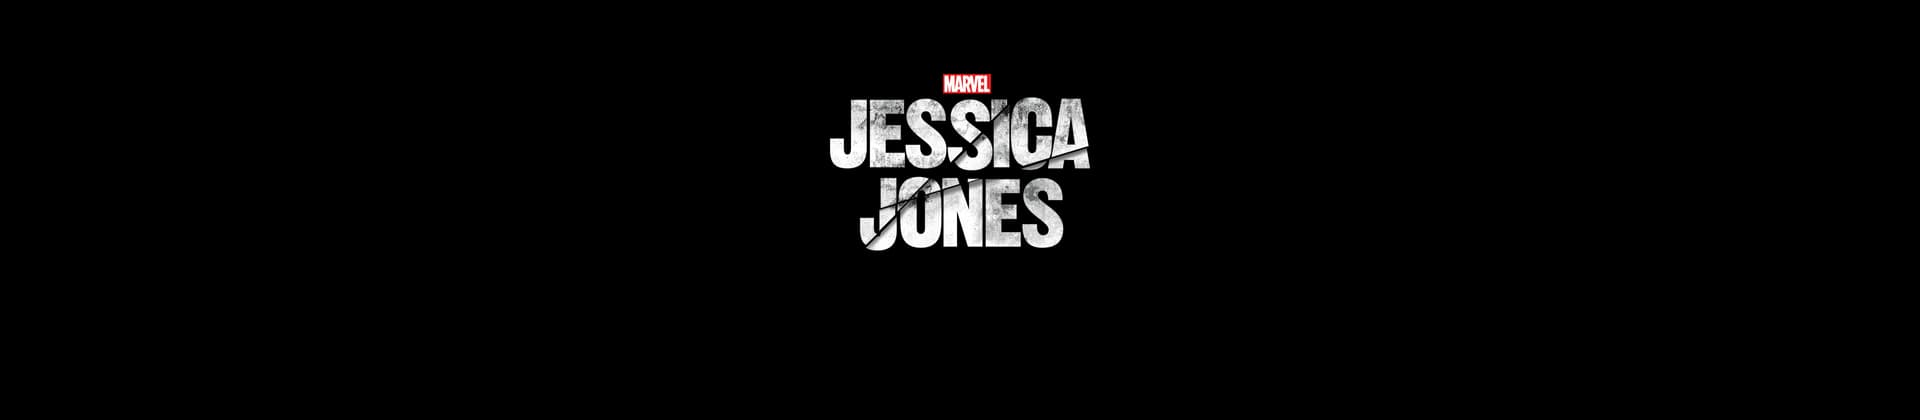 Marvel's Jessica Jones Season 2 TV Show Poster